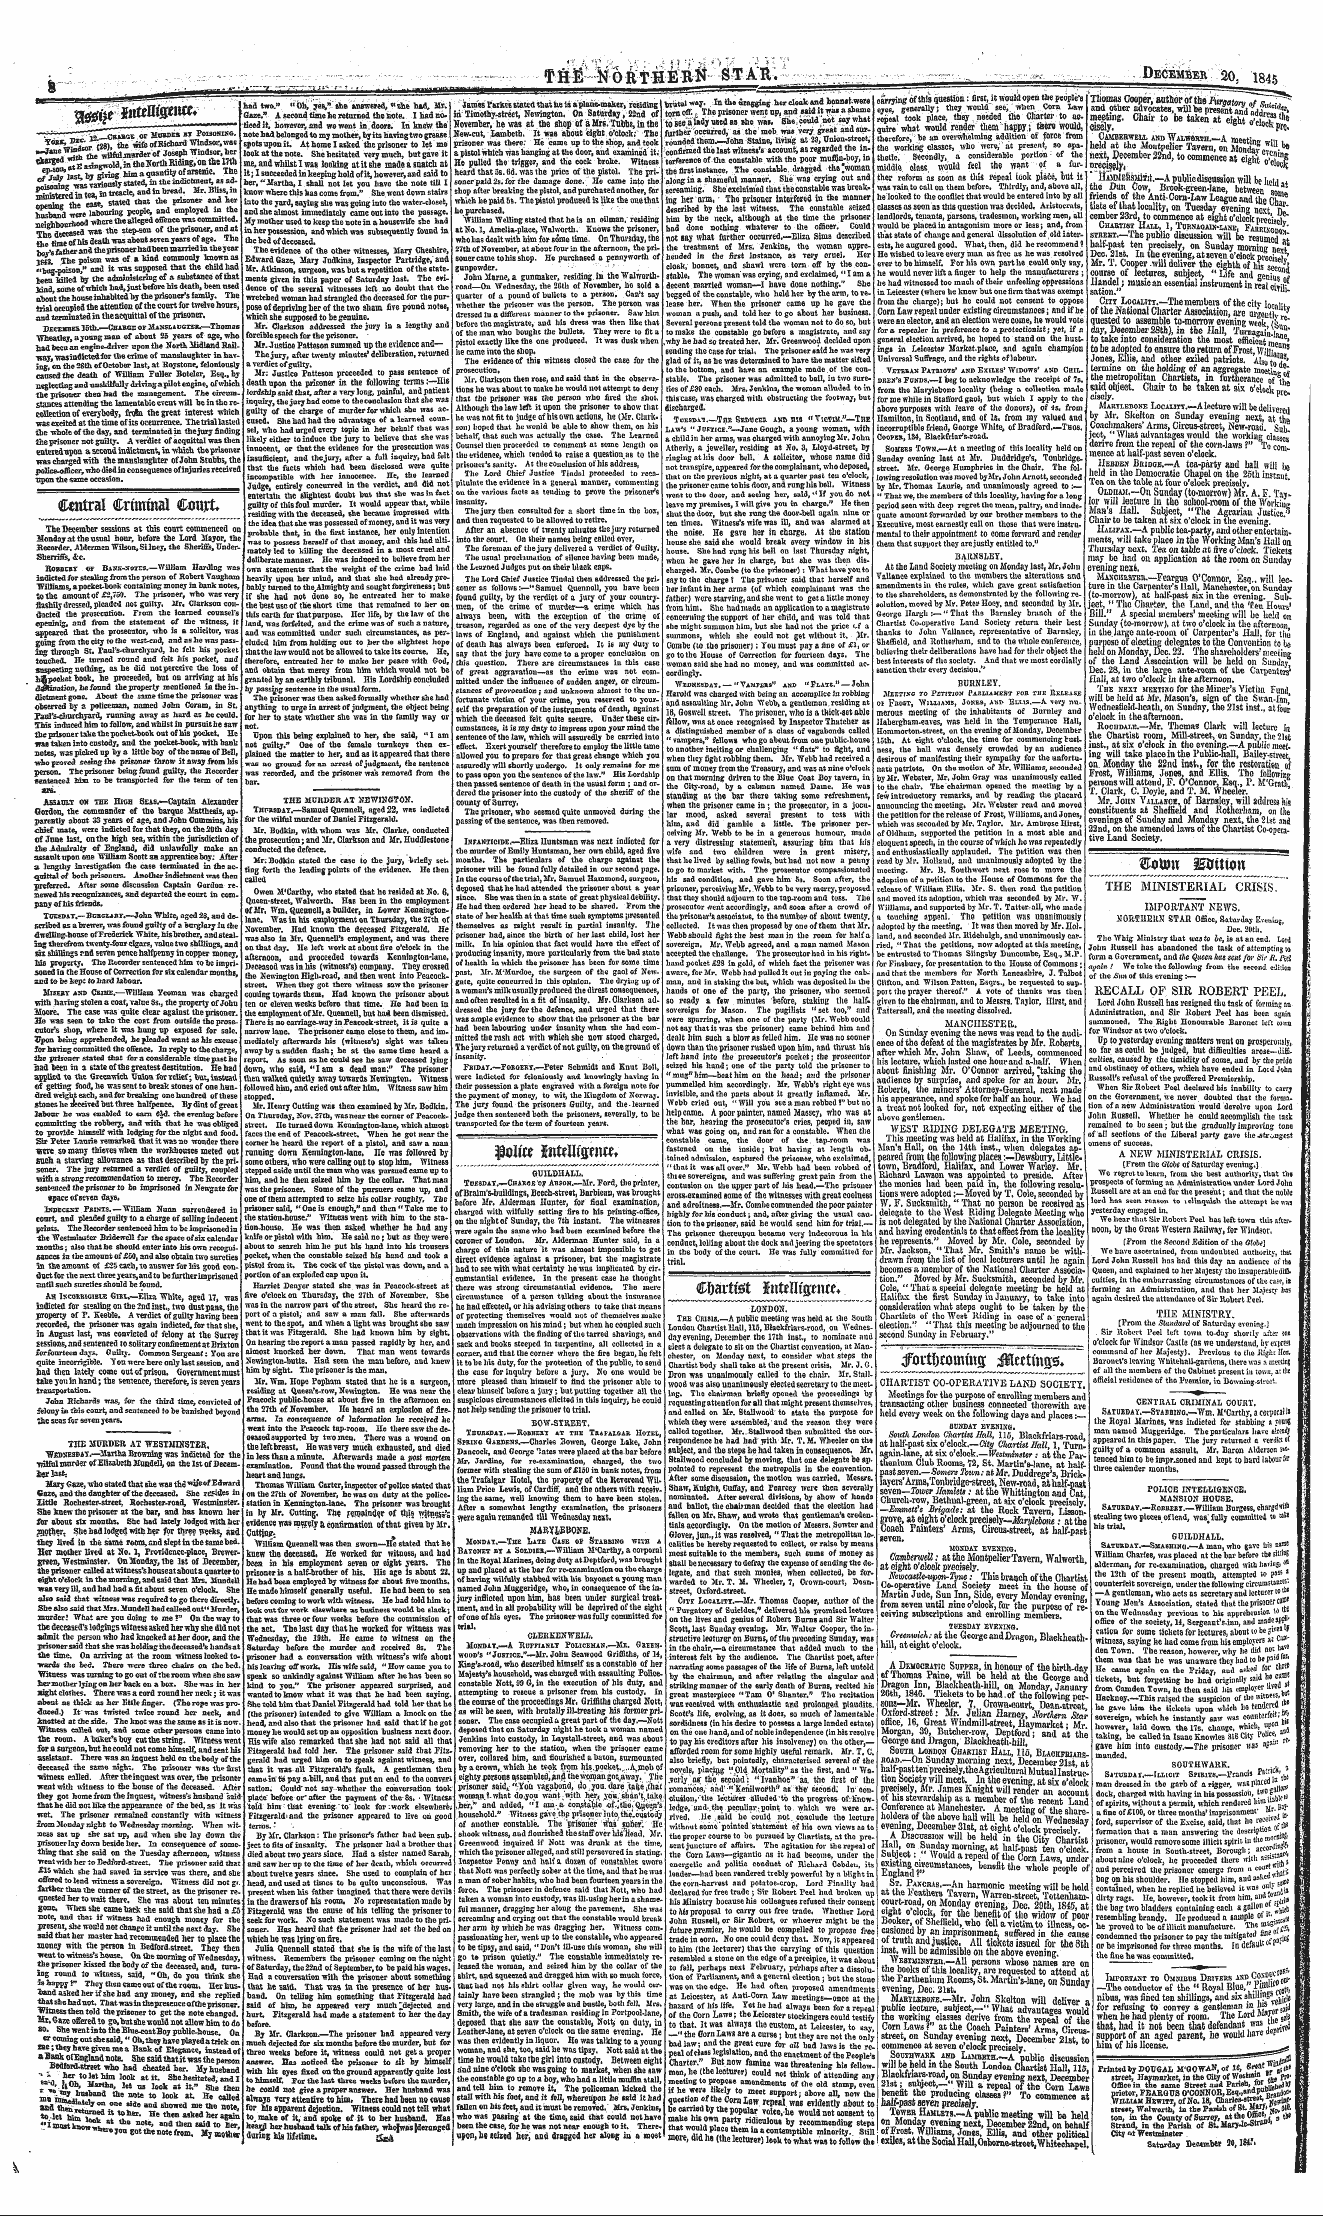 Northern Star (1837-1852): jS F Y, 4th edition - Guildhall. Tdesdav.—Chabos'o-R Aasok.—Mr...